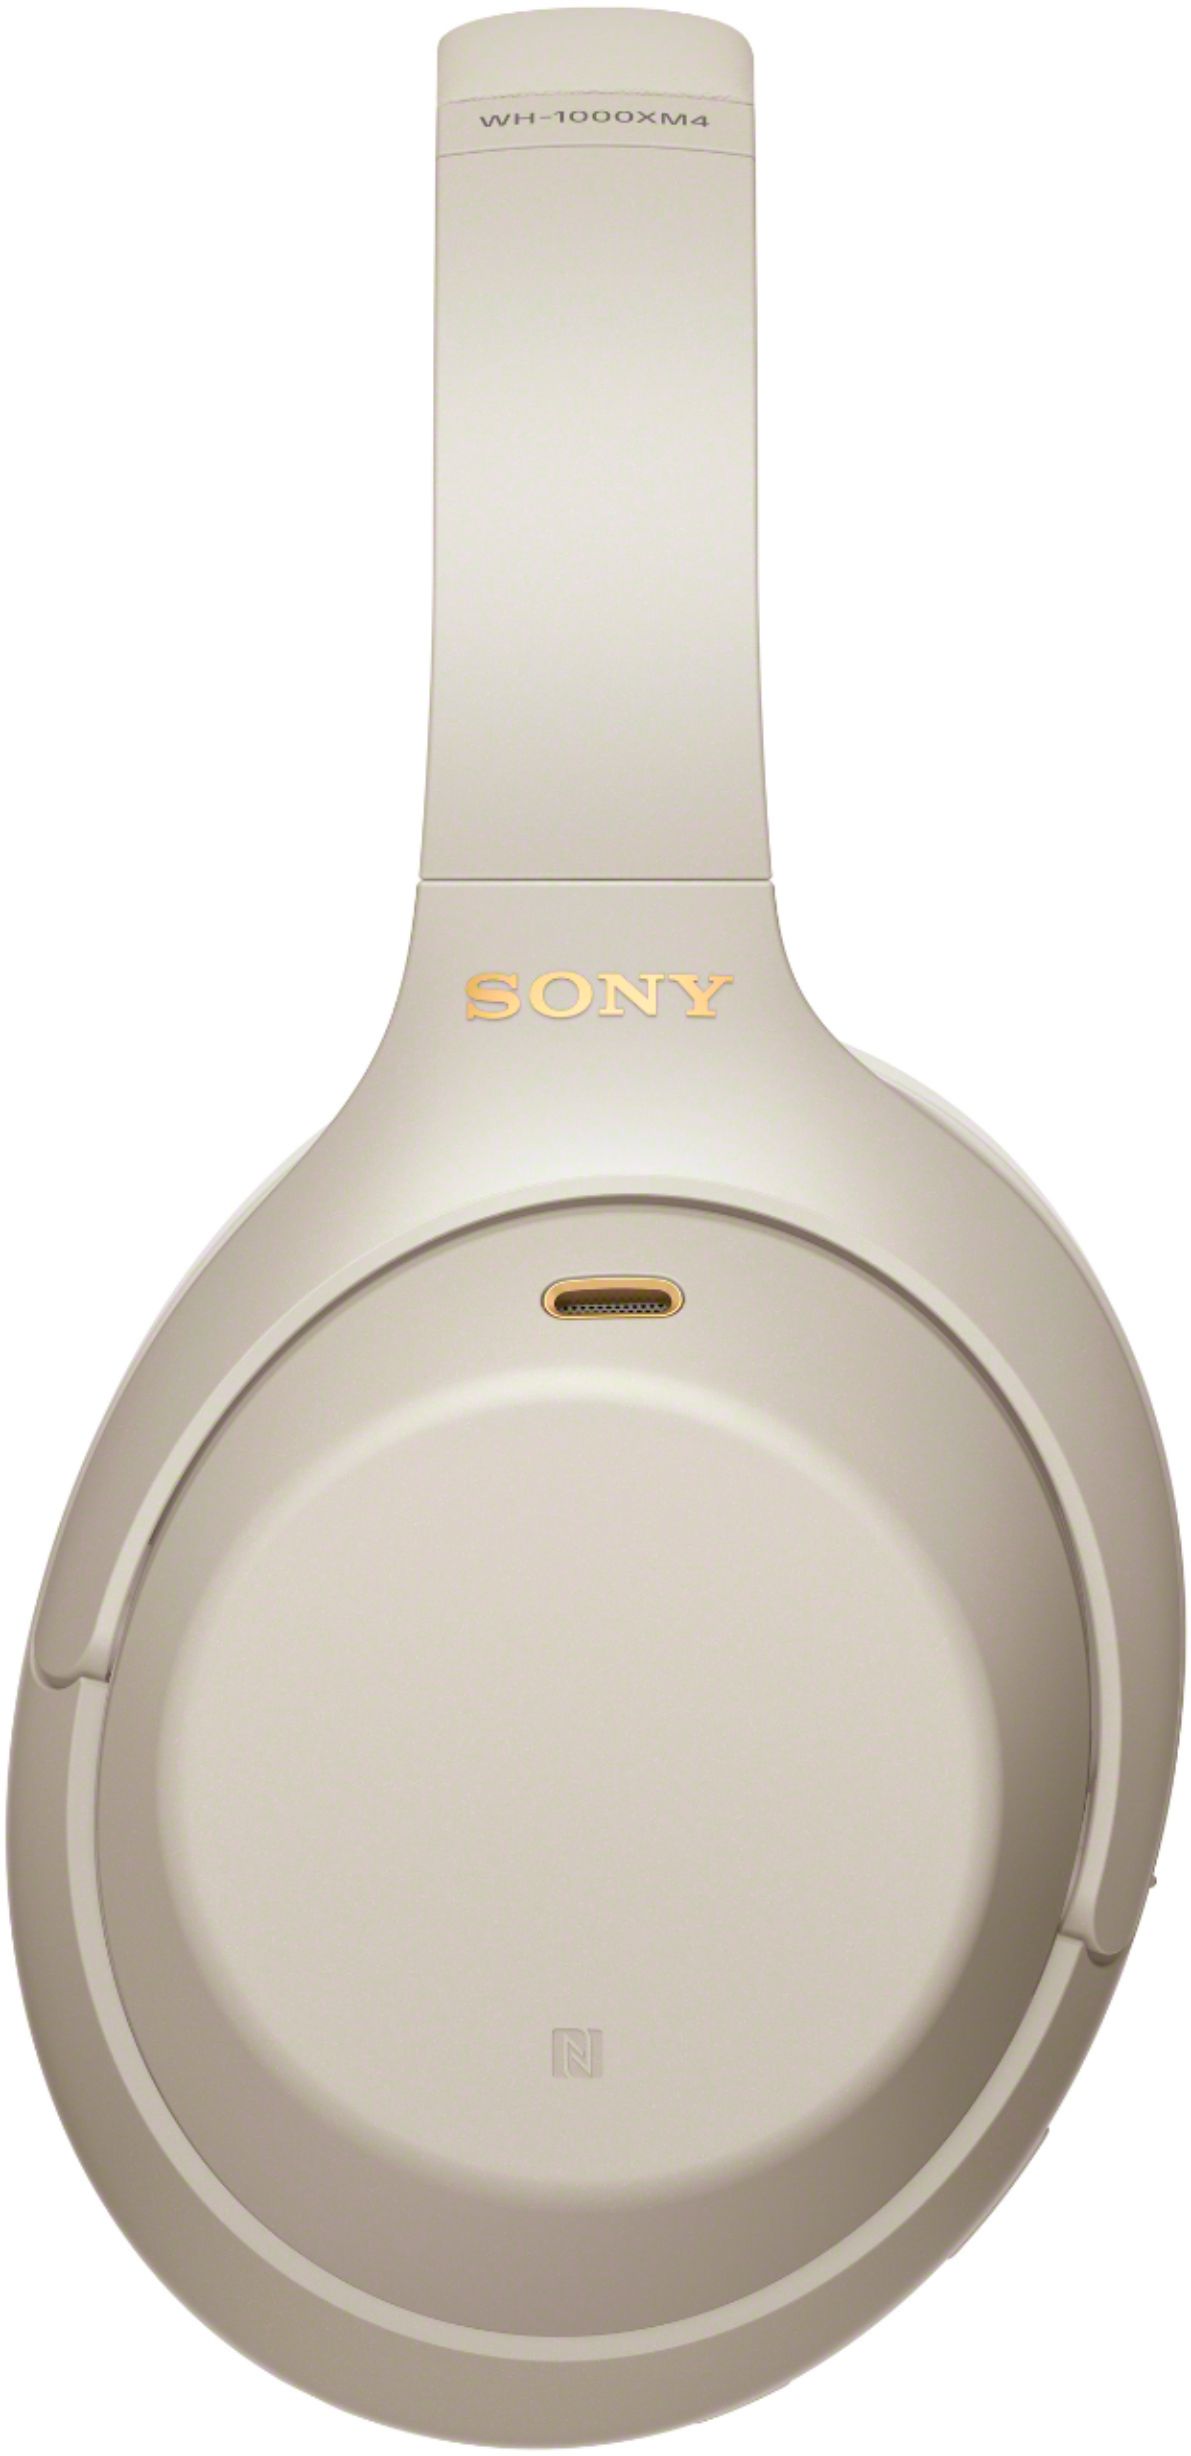 Sony WH-1000XM4 Wireless Premium Noise Canceling Overhead